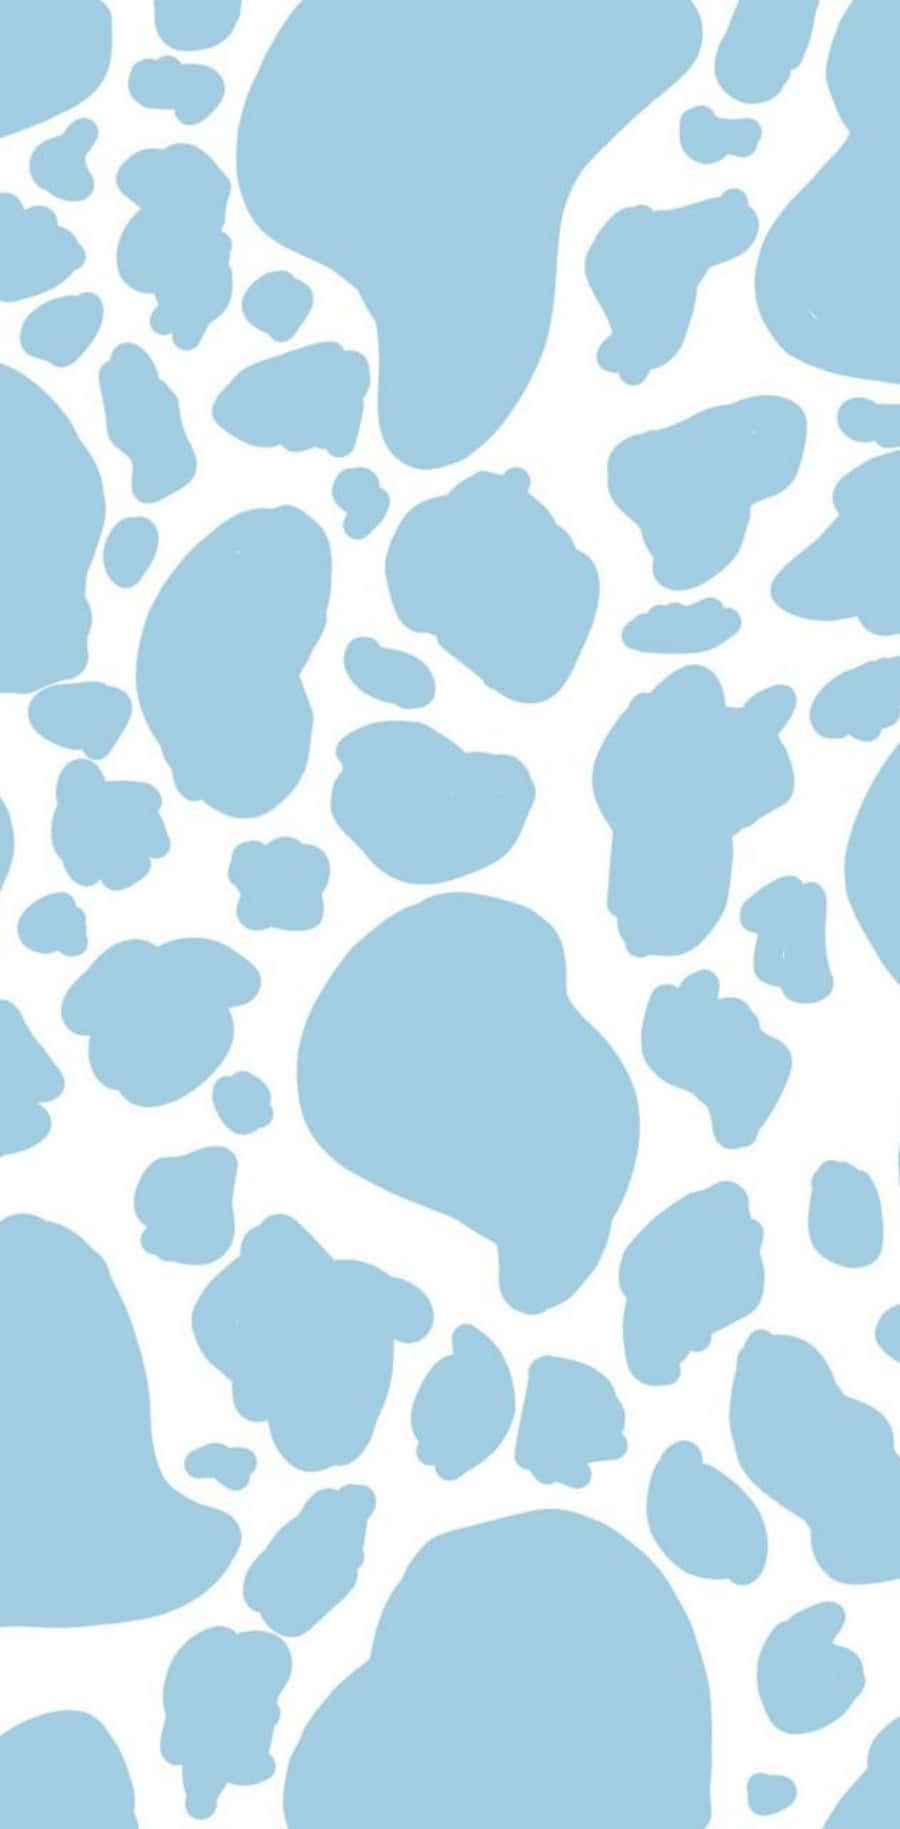 A unique blue and white cow print Wallpaper